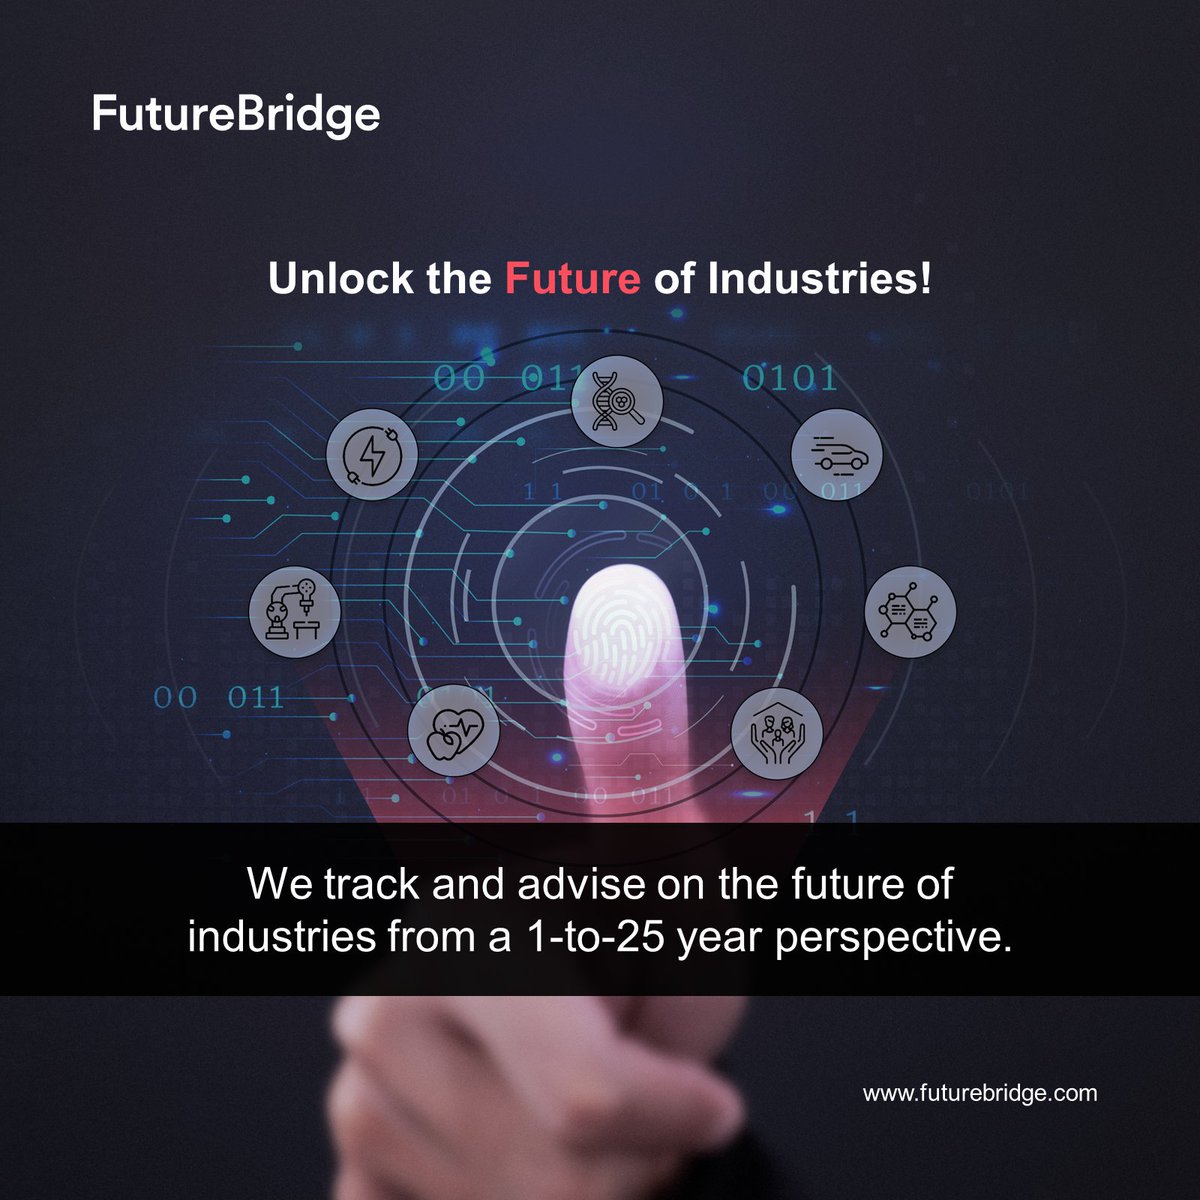 FutureBridge keeps you ahead on the technology curve, propels growth, find new opportunities, markets & models, and facilitates solutions & partnerships.
Register now: bit.ly/3Jb0jUX

#FutureBridge #FutureTechnologies #FutureLeaders #InnovativeTechnology #TechForesight